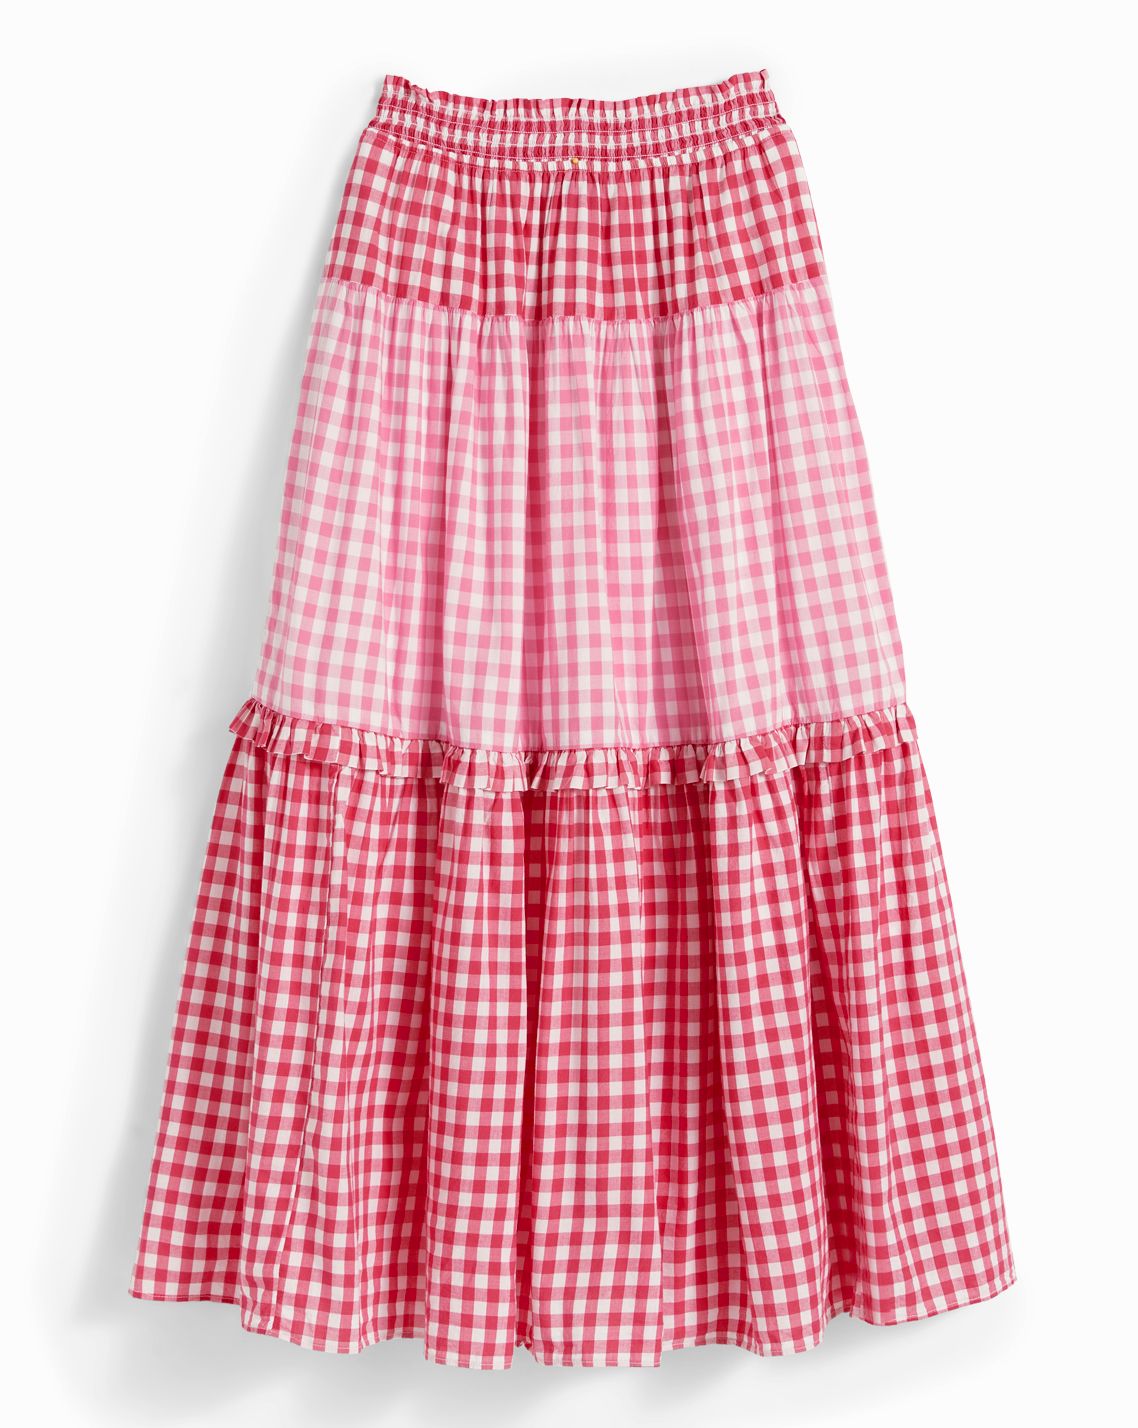 Peasant Skirt in Pink Gingham